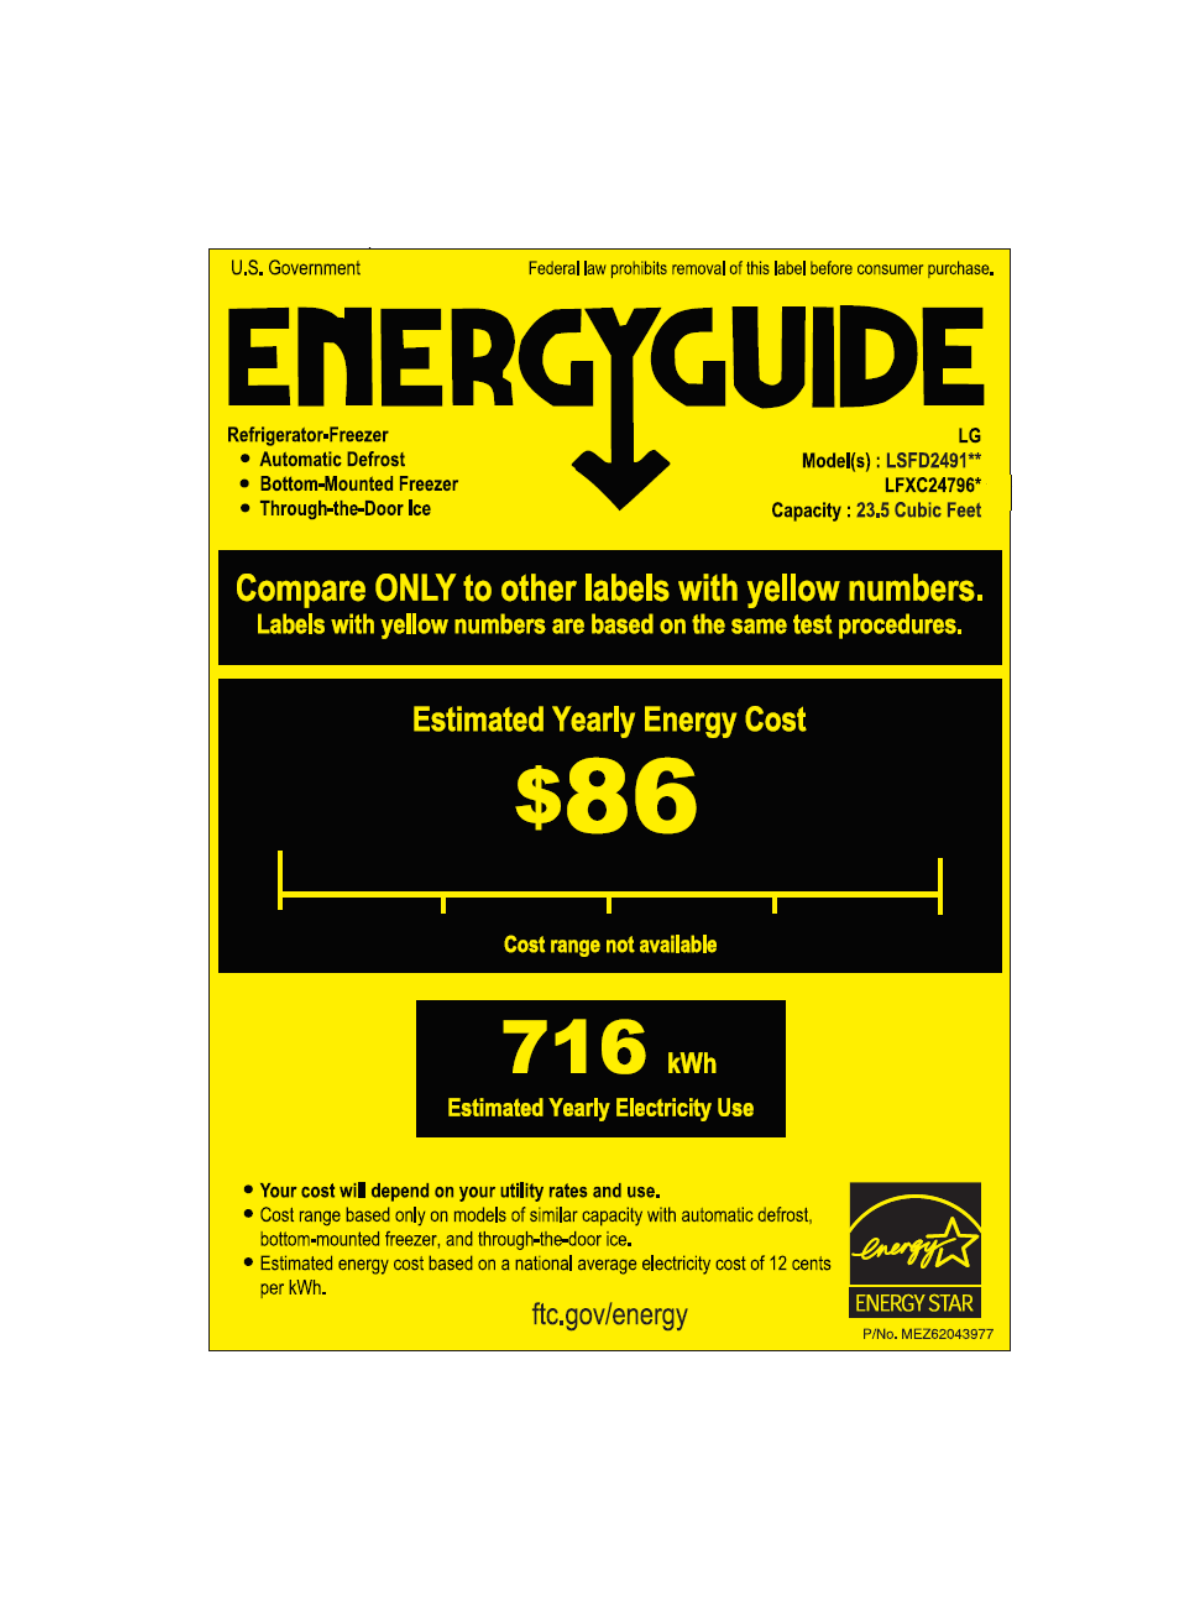 LG LFXC24796S Energy manual